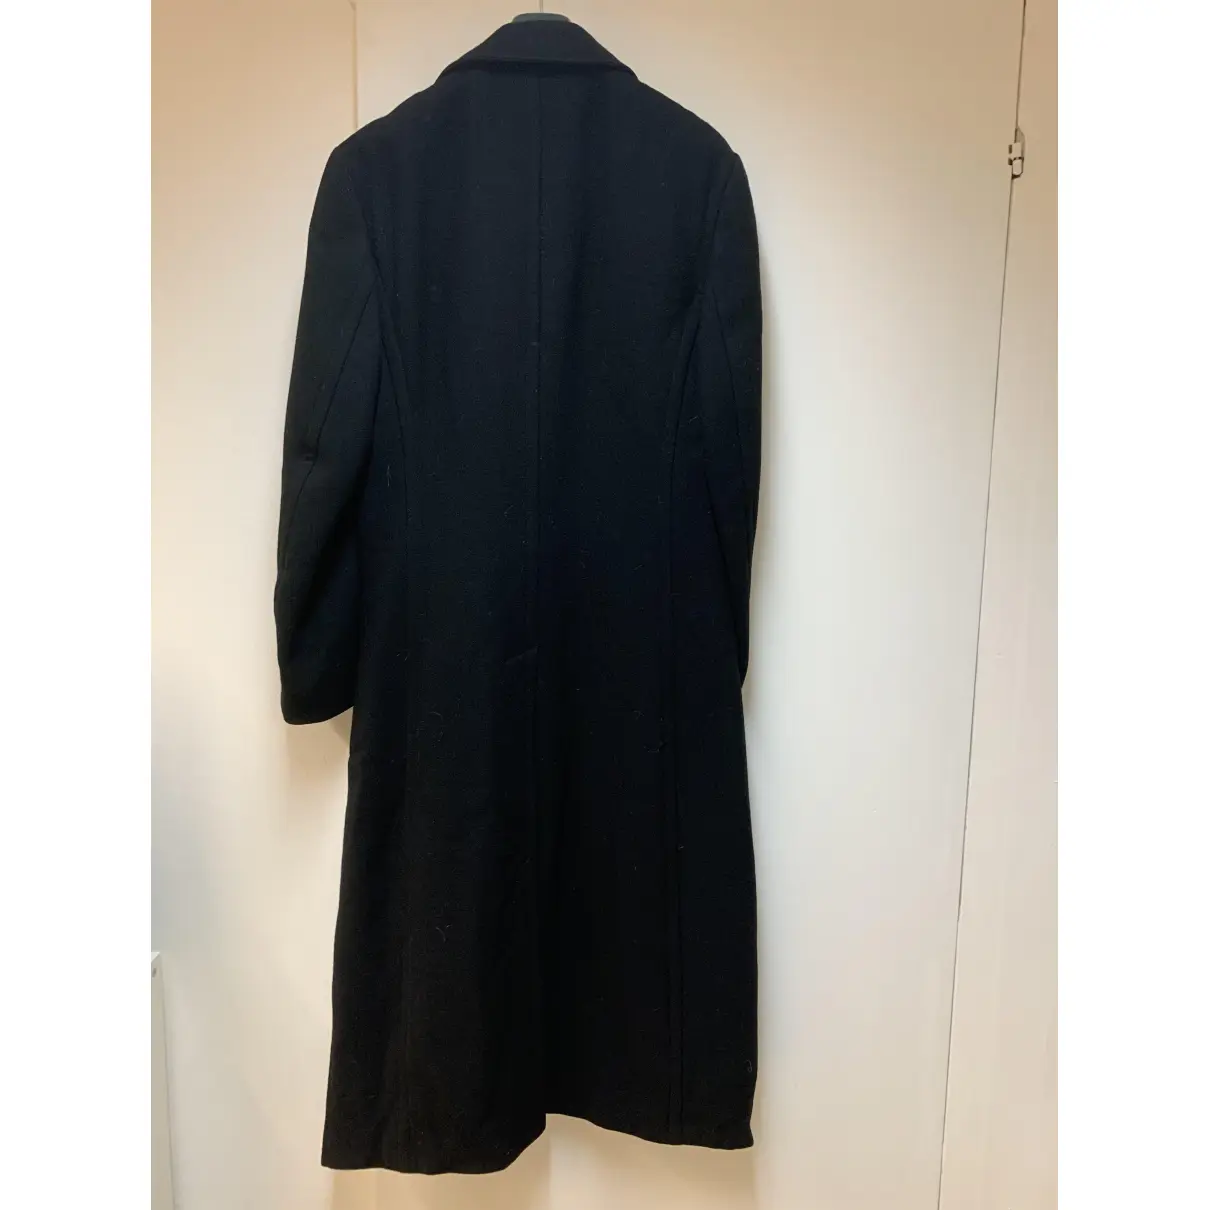 Buy Thierry Mugler Wool coat online